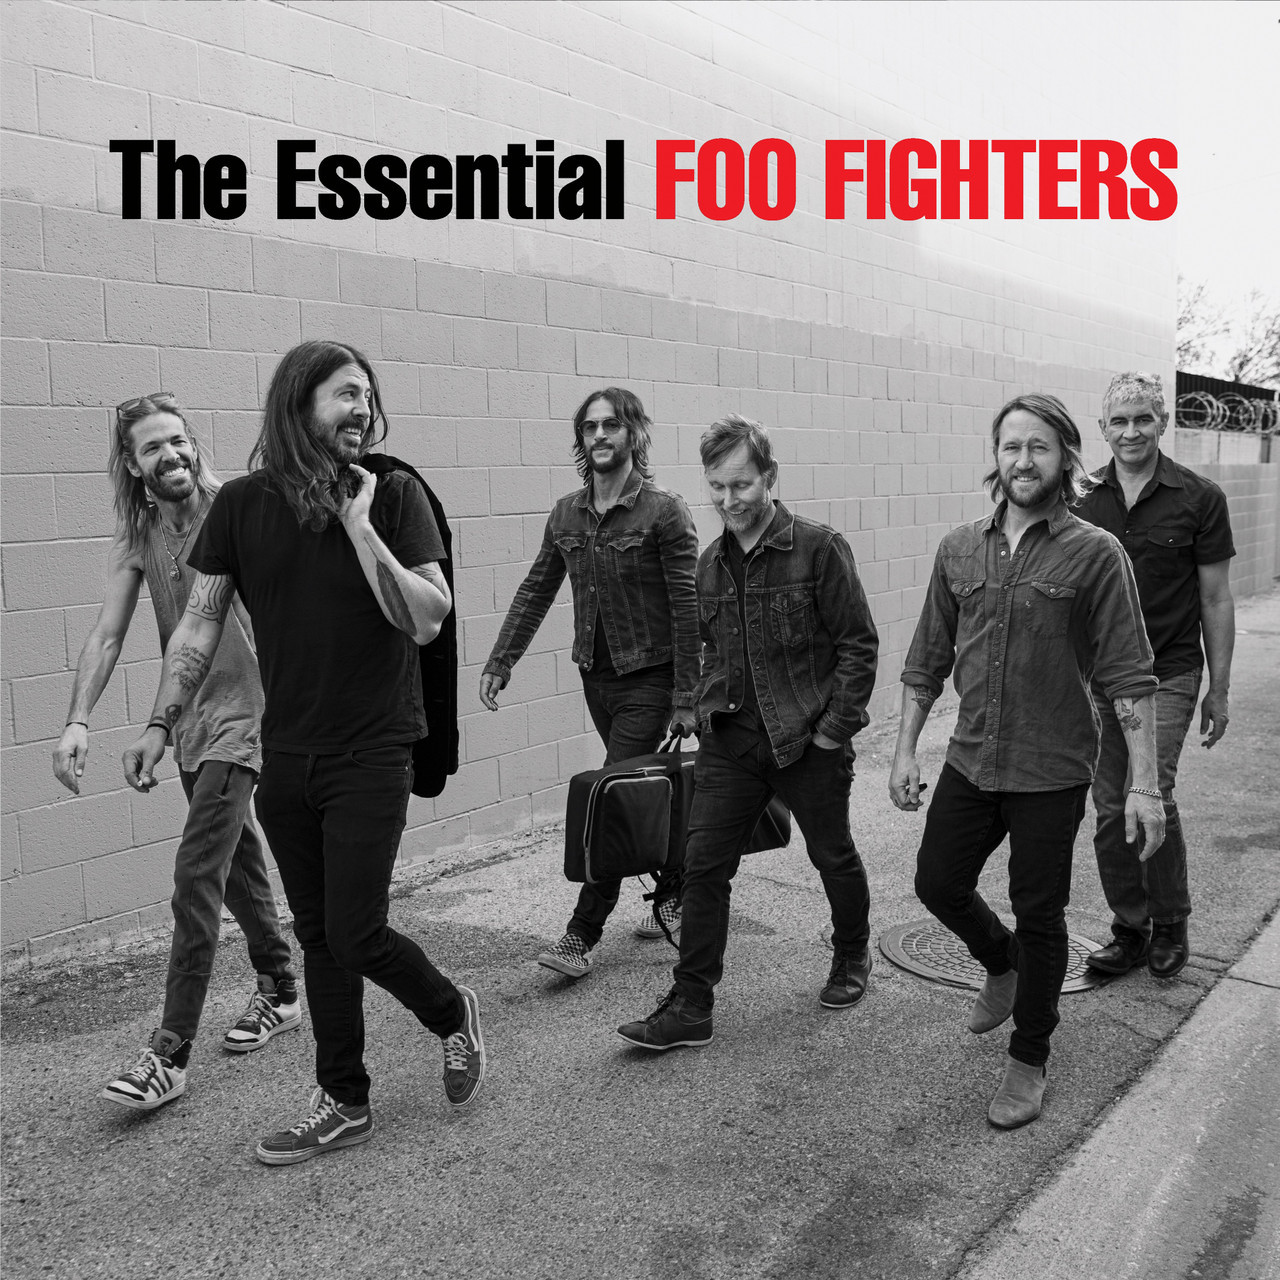 Foo　Fighters'　CD　'The　Fighters　Foo　Essential